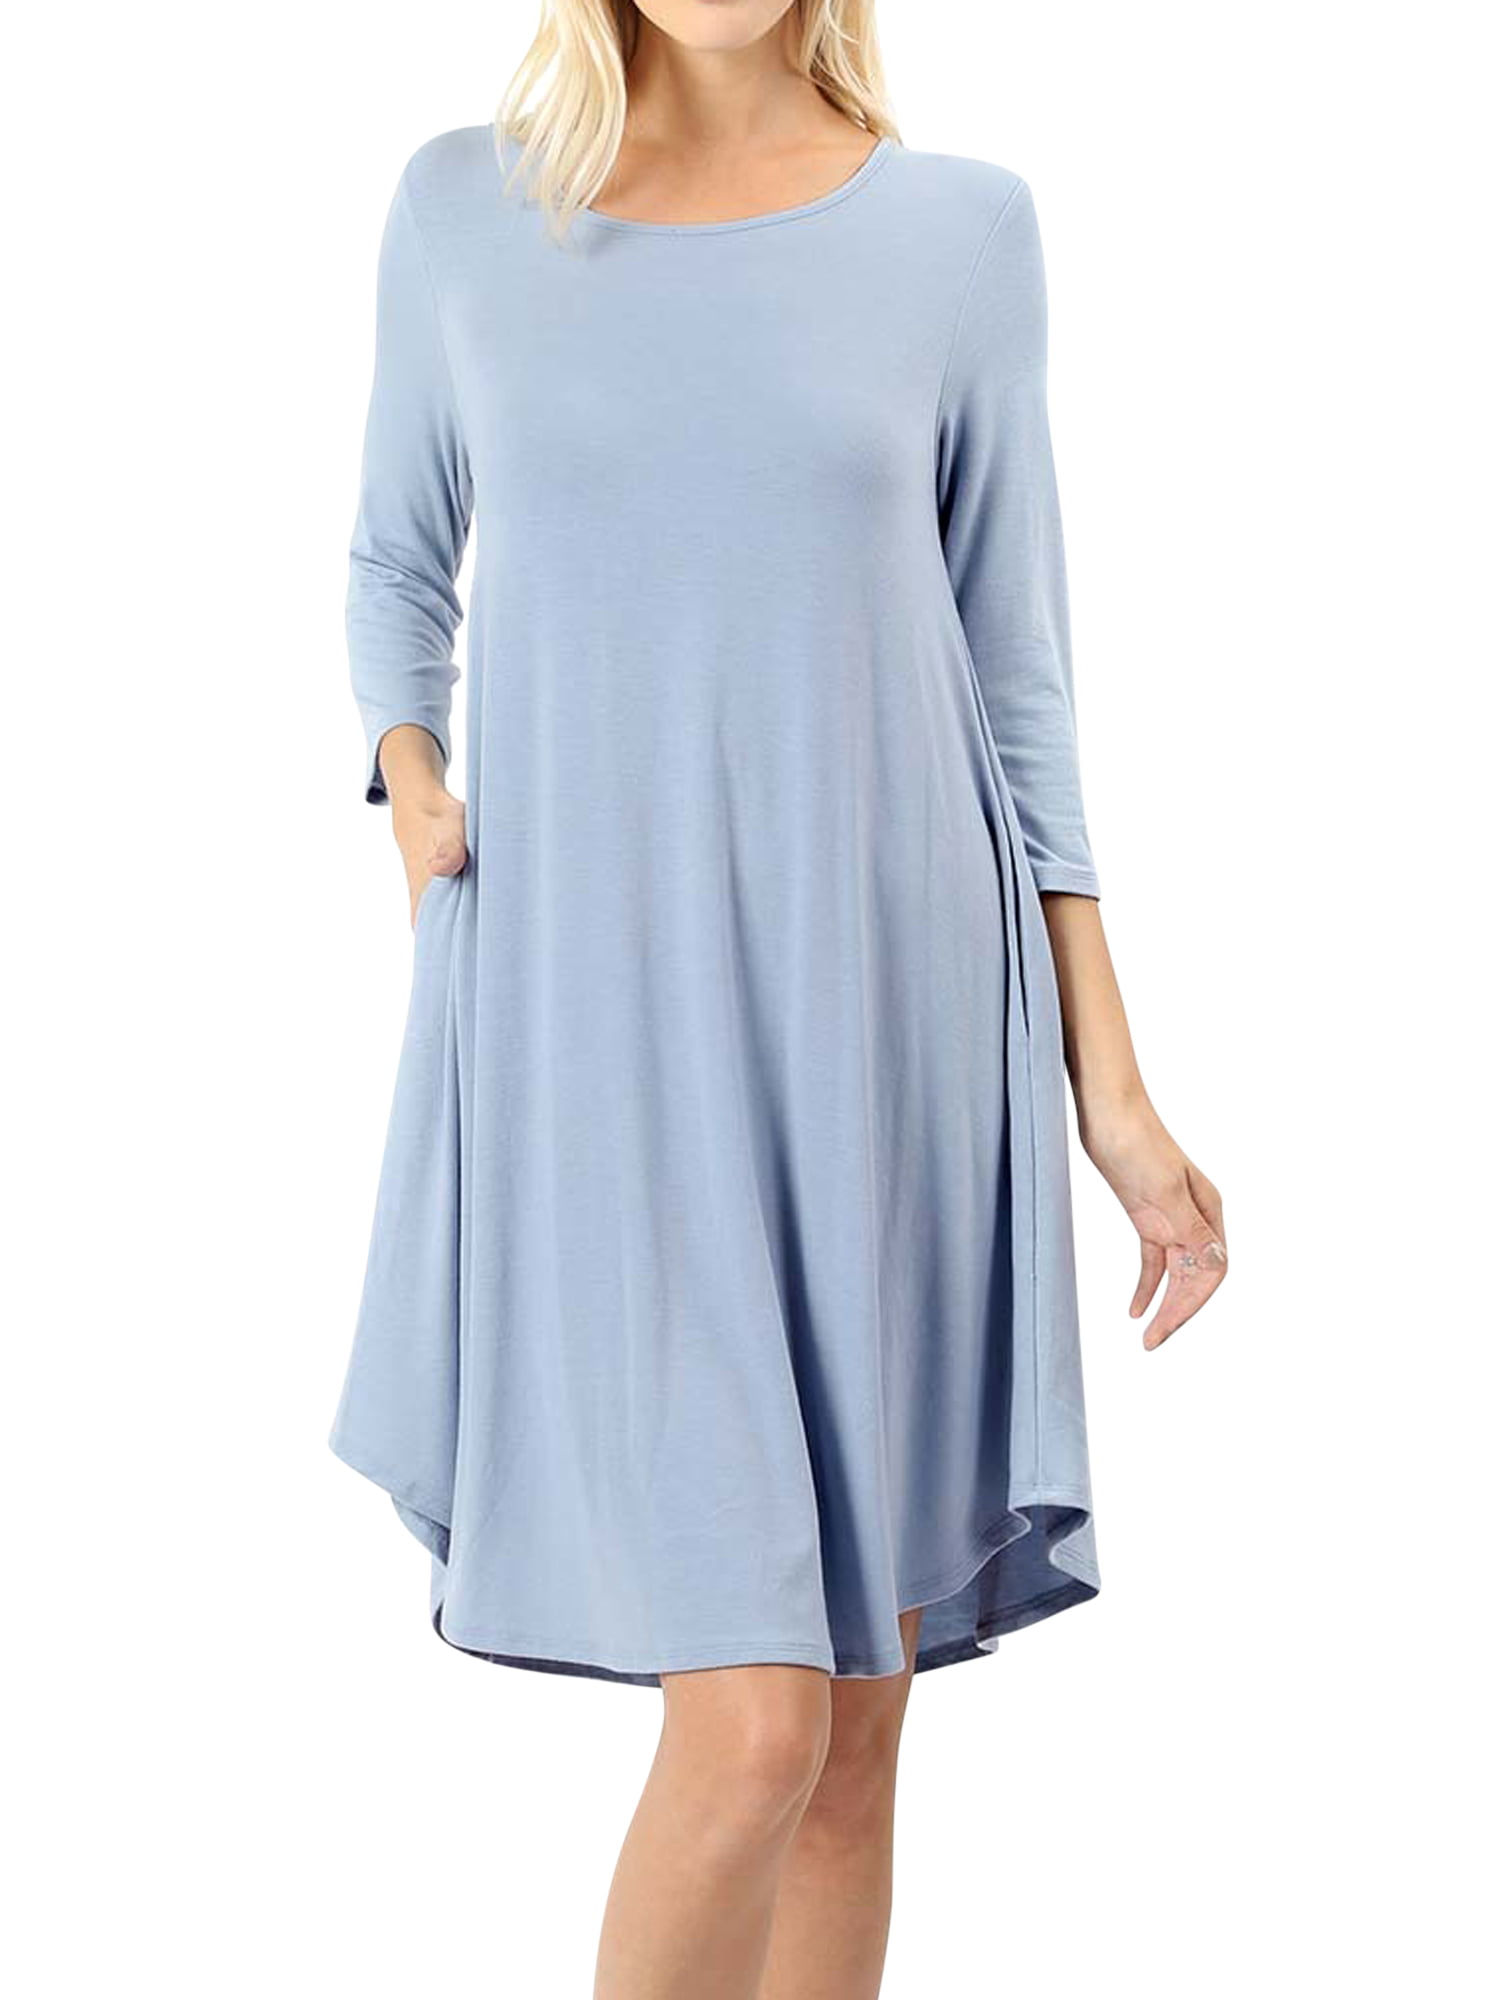 Women & Plus 3/4 Sleeve Round Hem Knee Length A-Line Tunic Dress with Side Pockets (Ash Blue, XL)